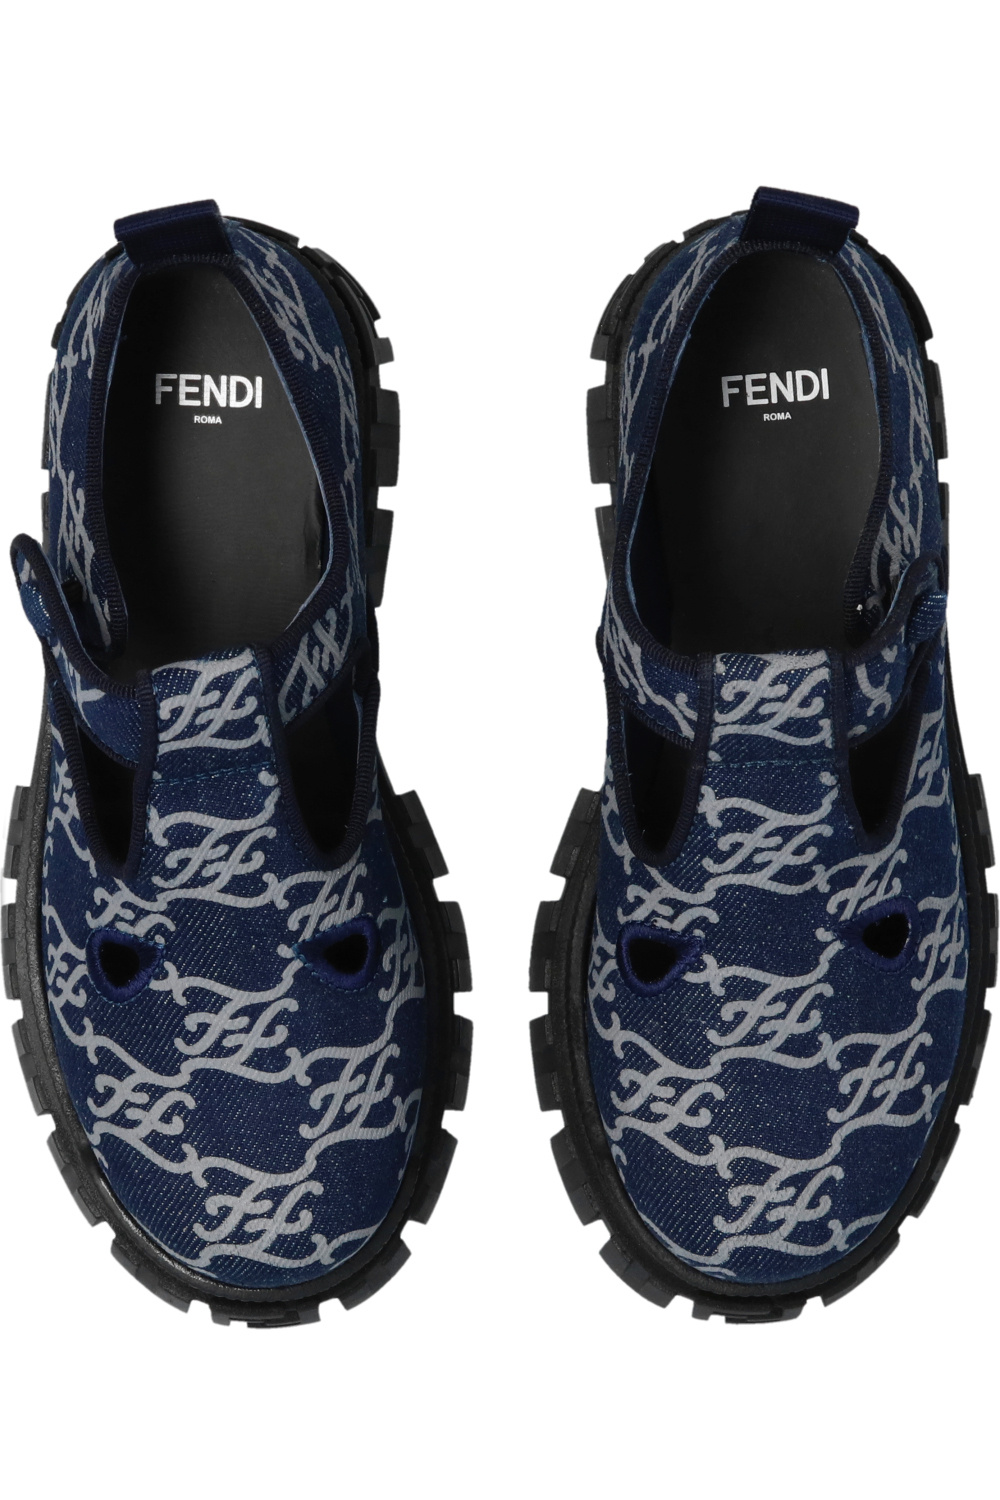 Fendi Kids Platform dresses shoes